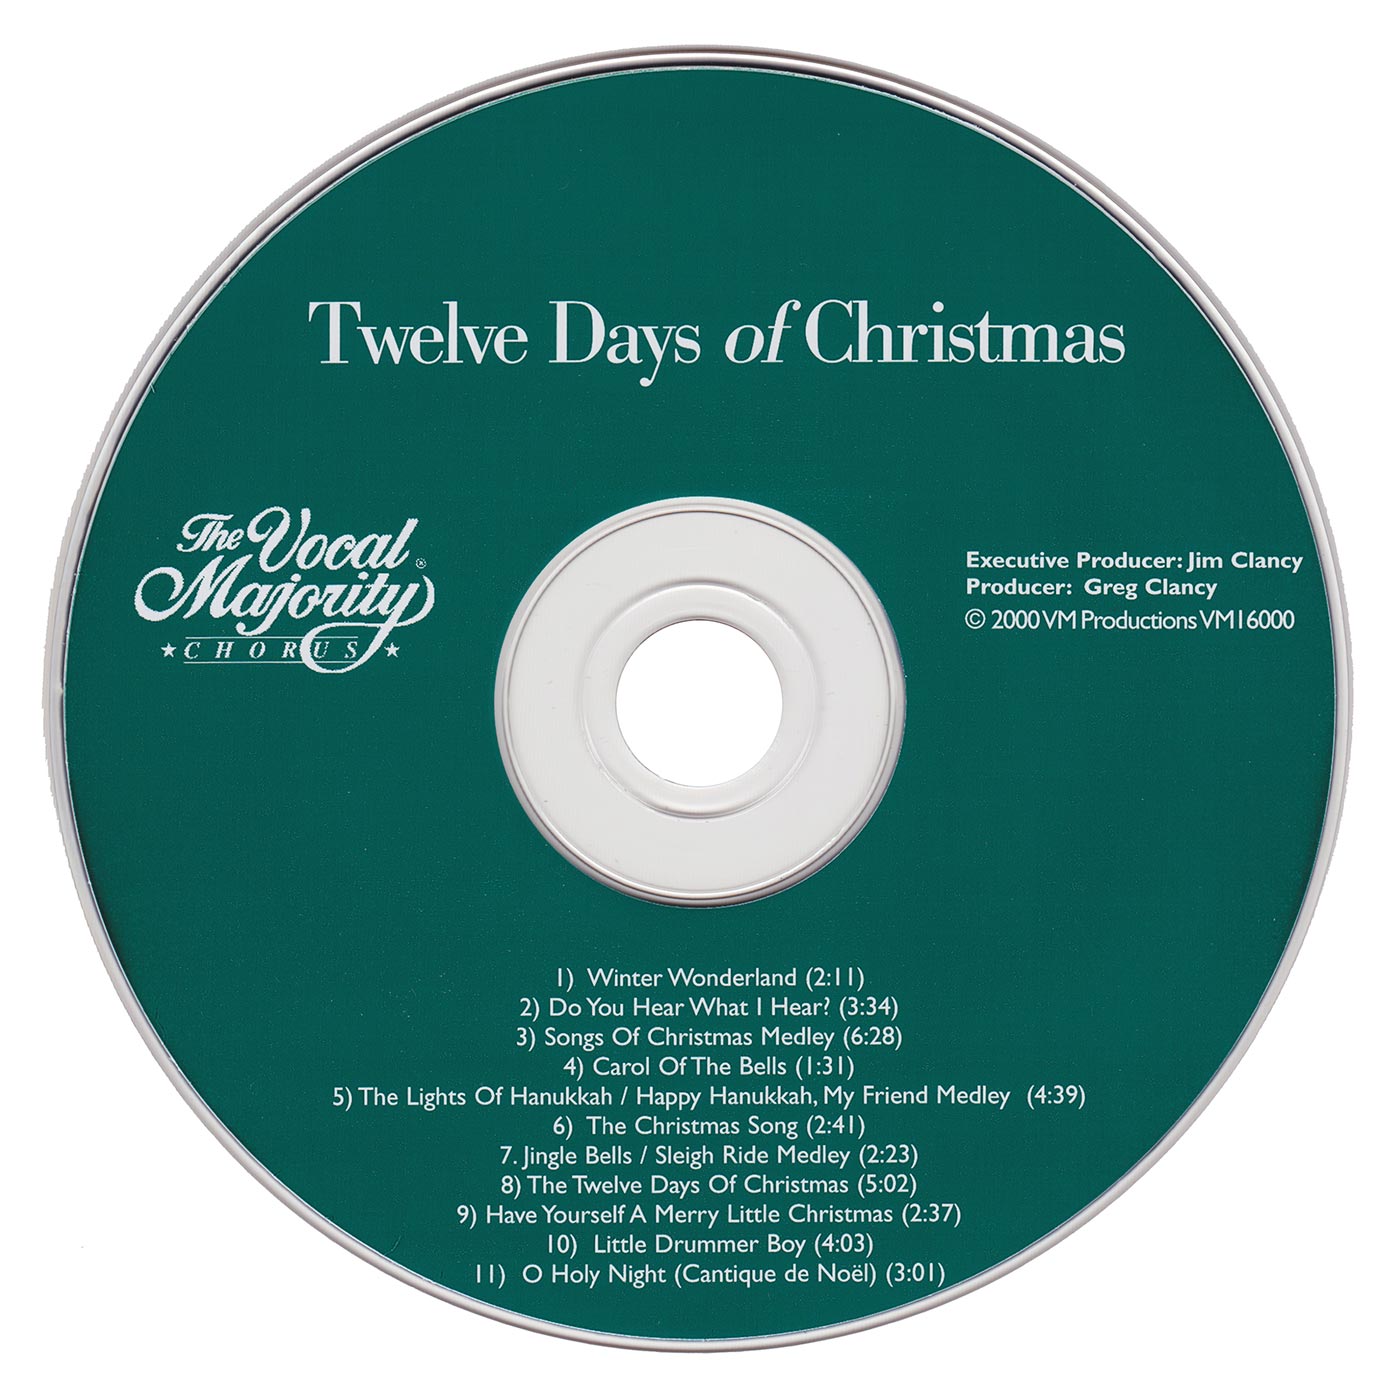 Disc Art: Twelve Days of Christmas